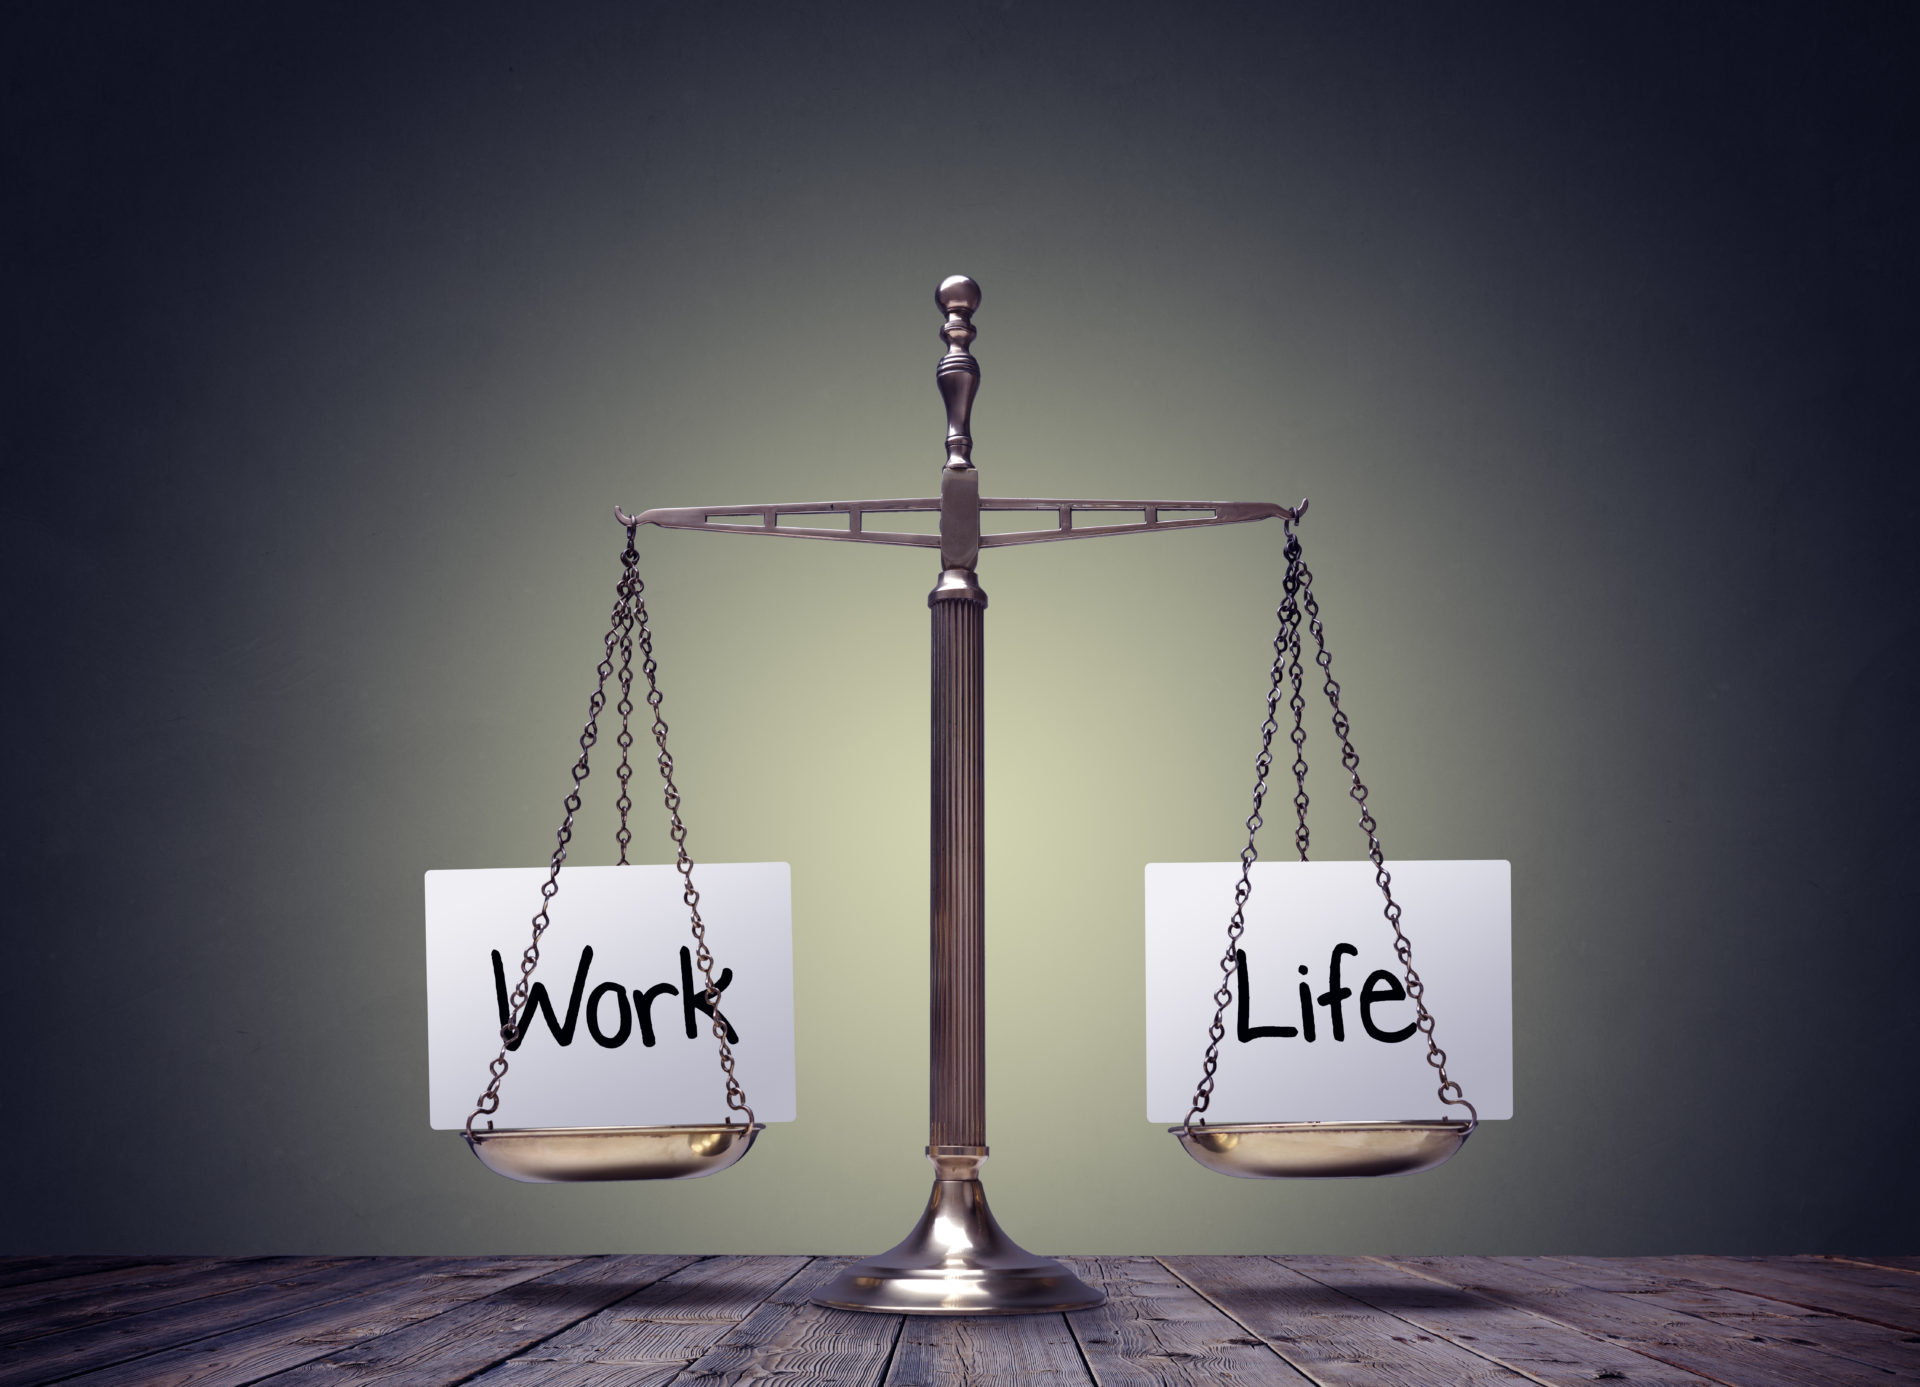 research methodology of work life balance